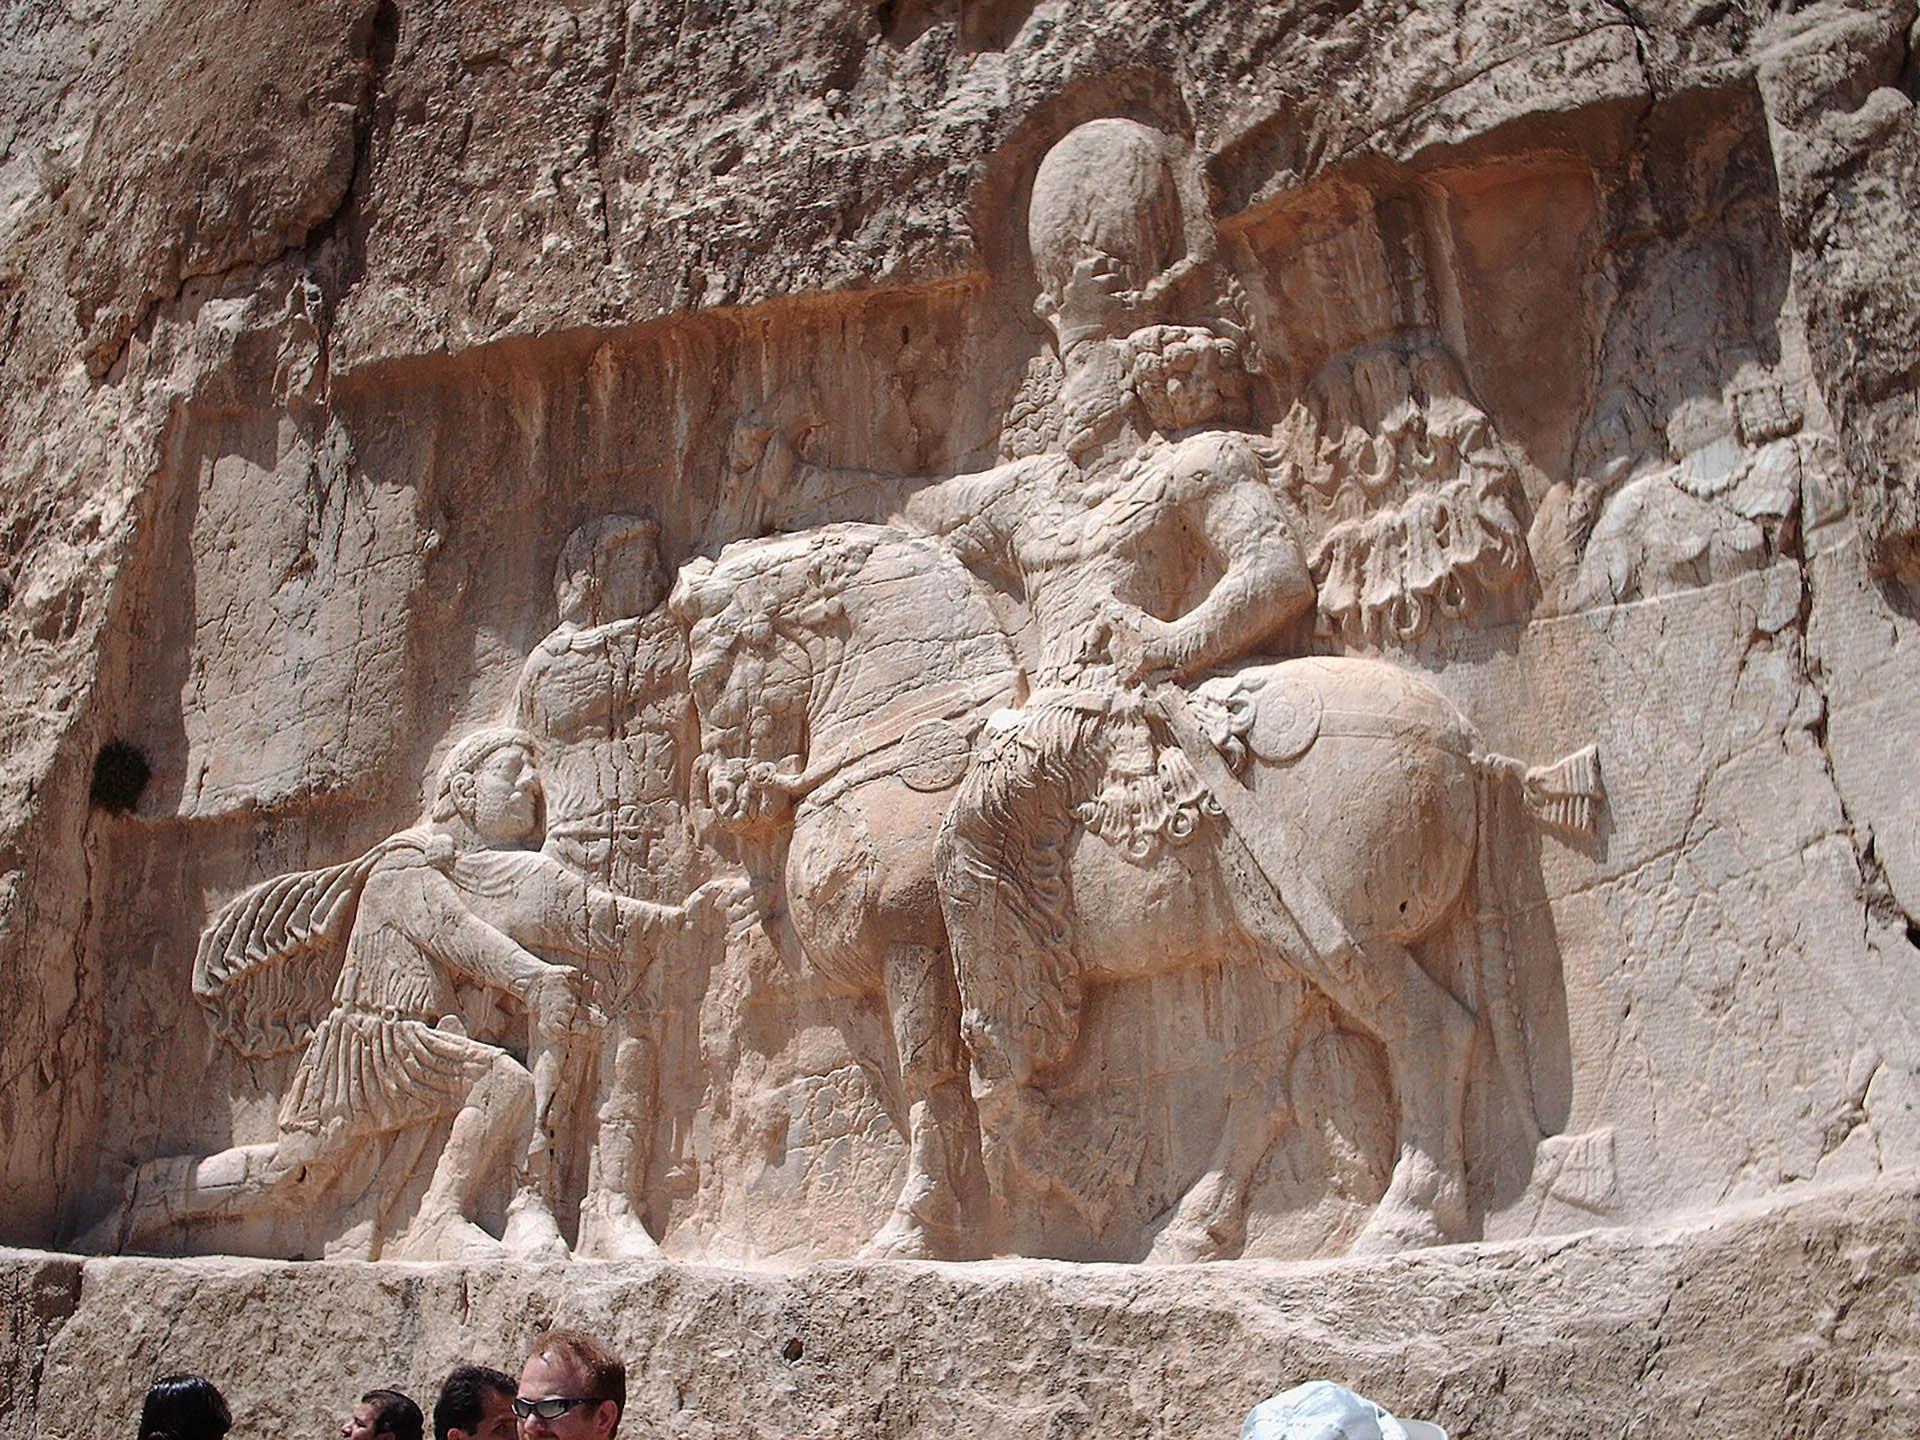 Naqsh-e Rustam: The Ancient Persian Necropolis of Achaemenid Kings